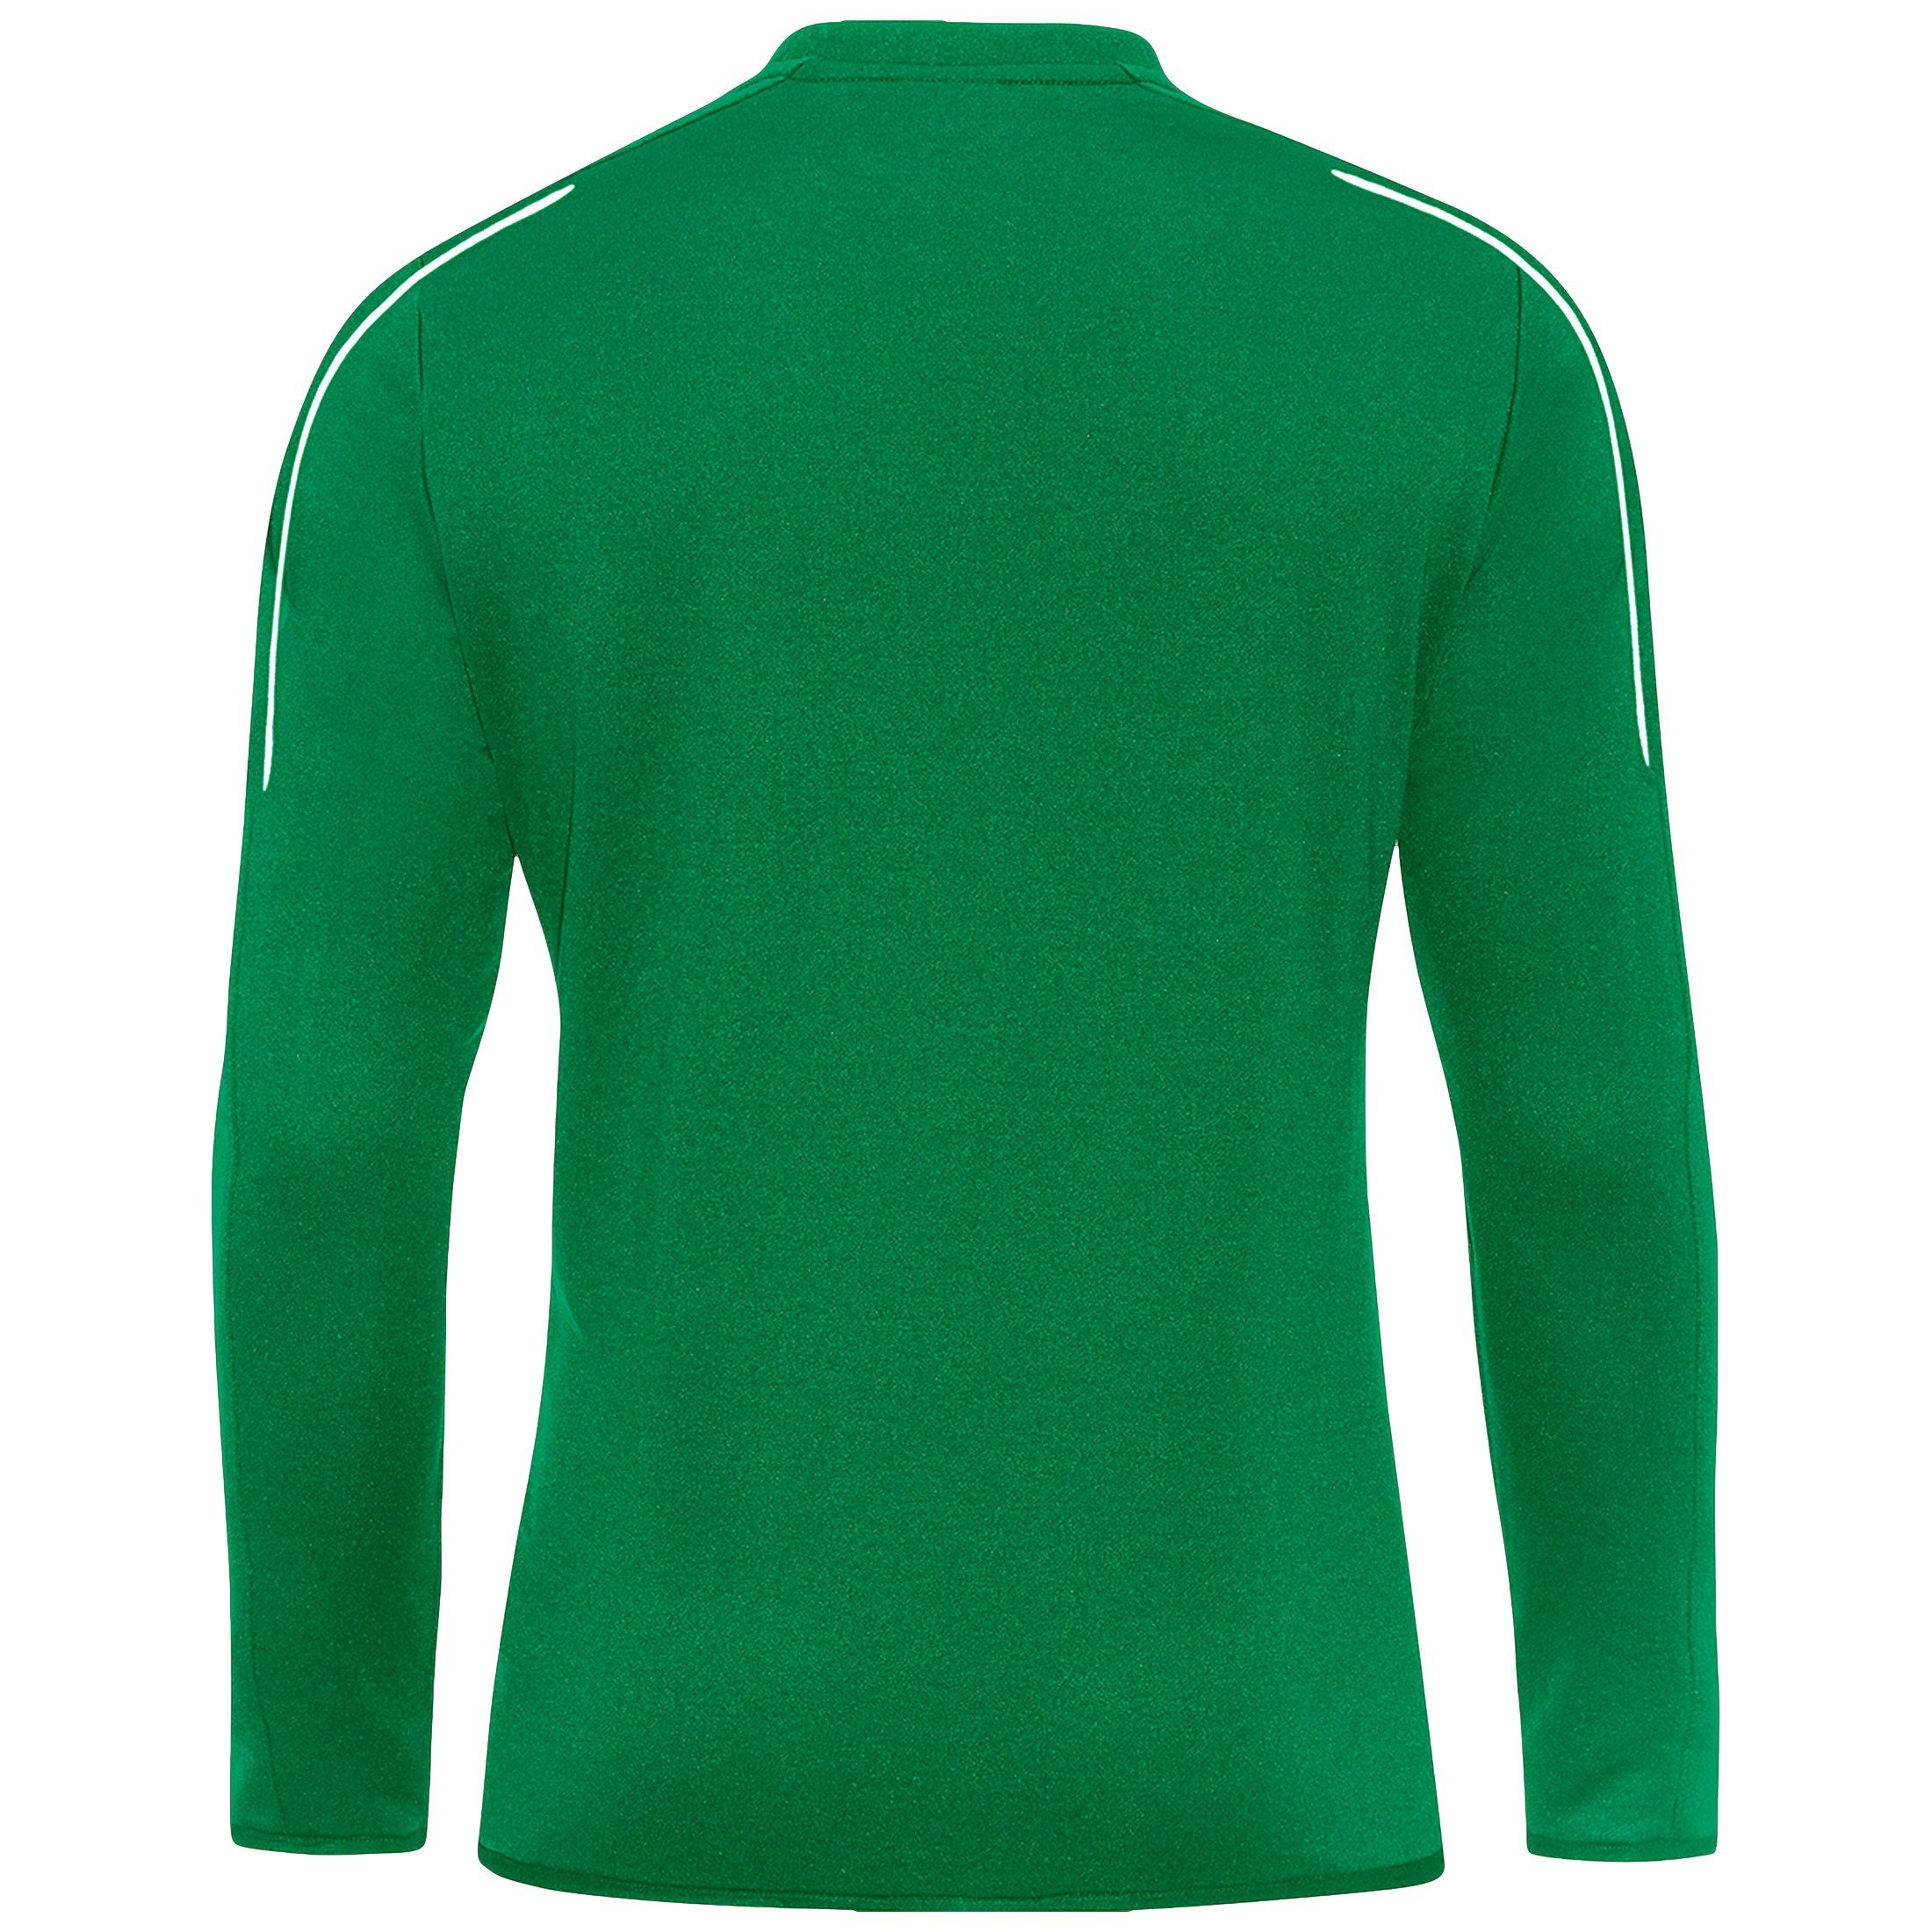 Herren grün Sweatshirt Trainingssweat Jako Classico